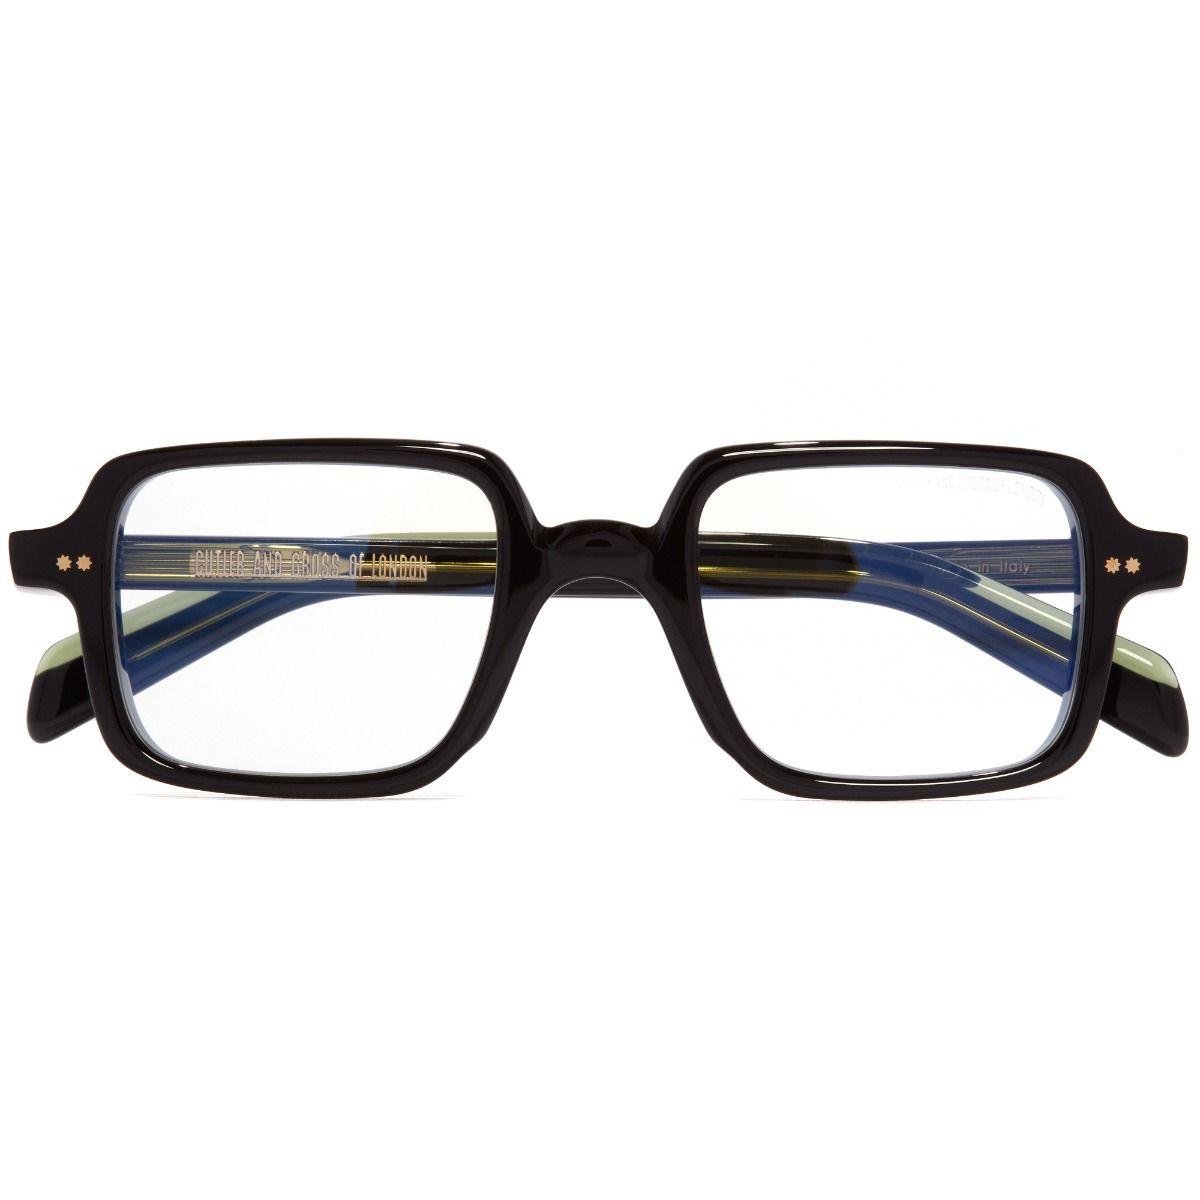 GR02 Rectangle Optical Glasses - Black